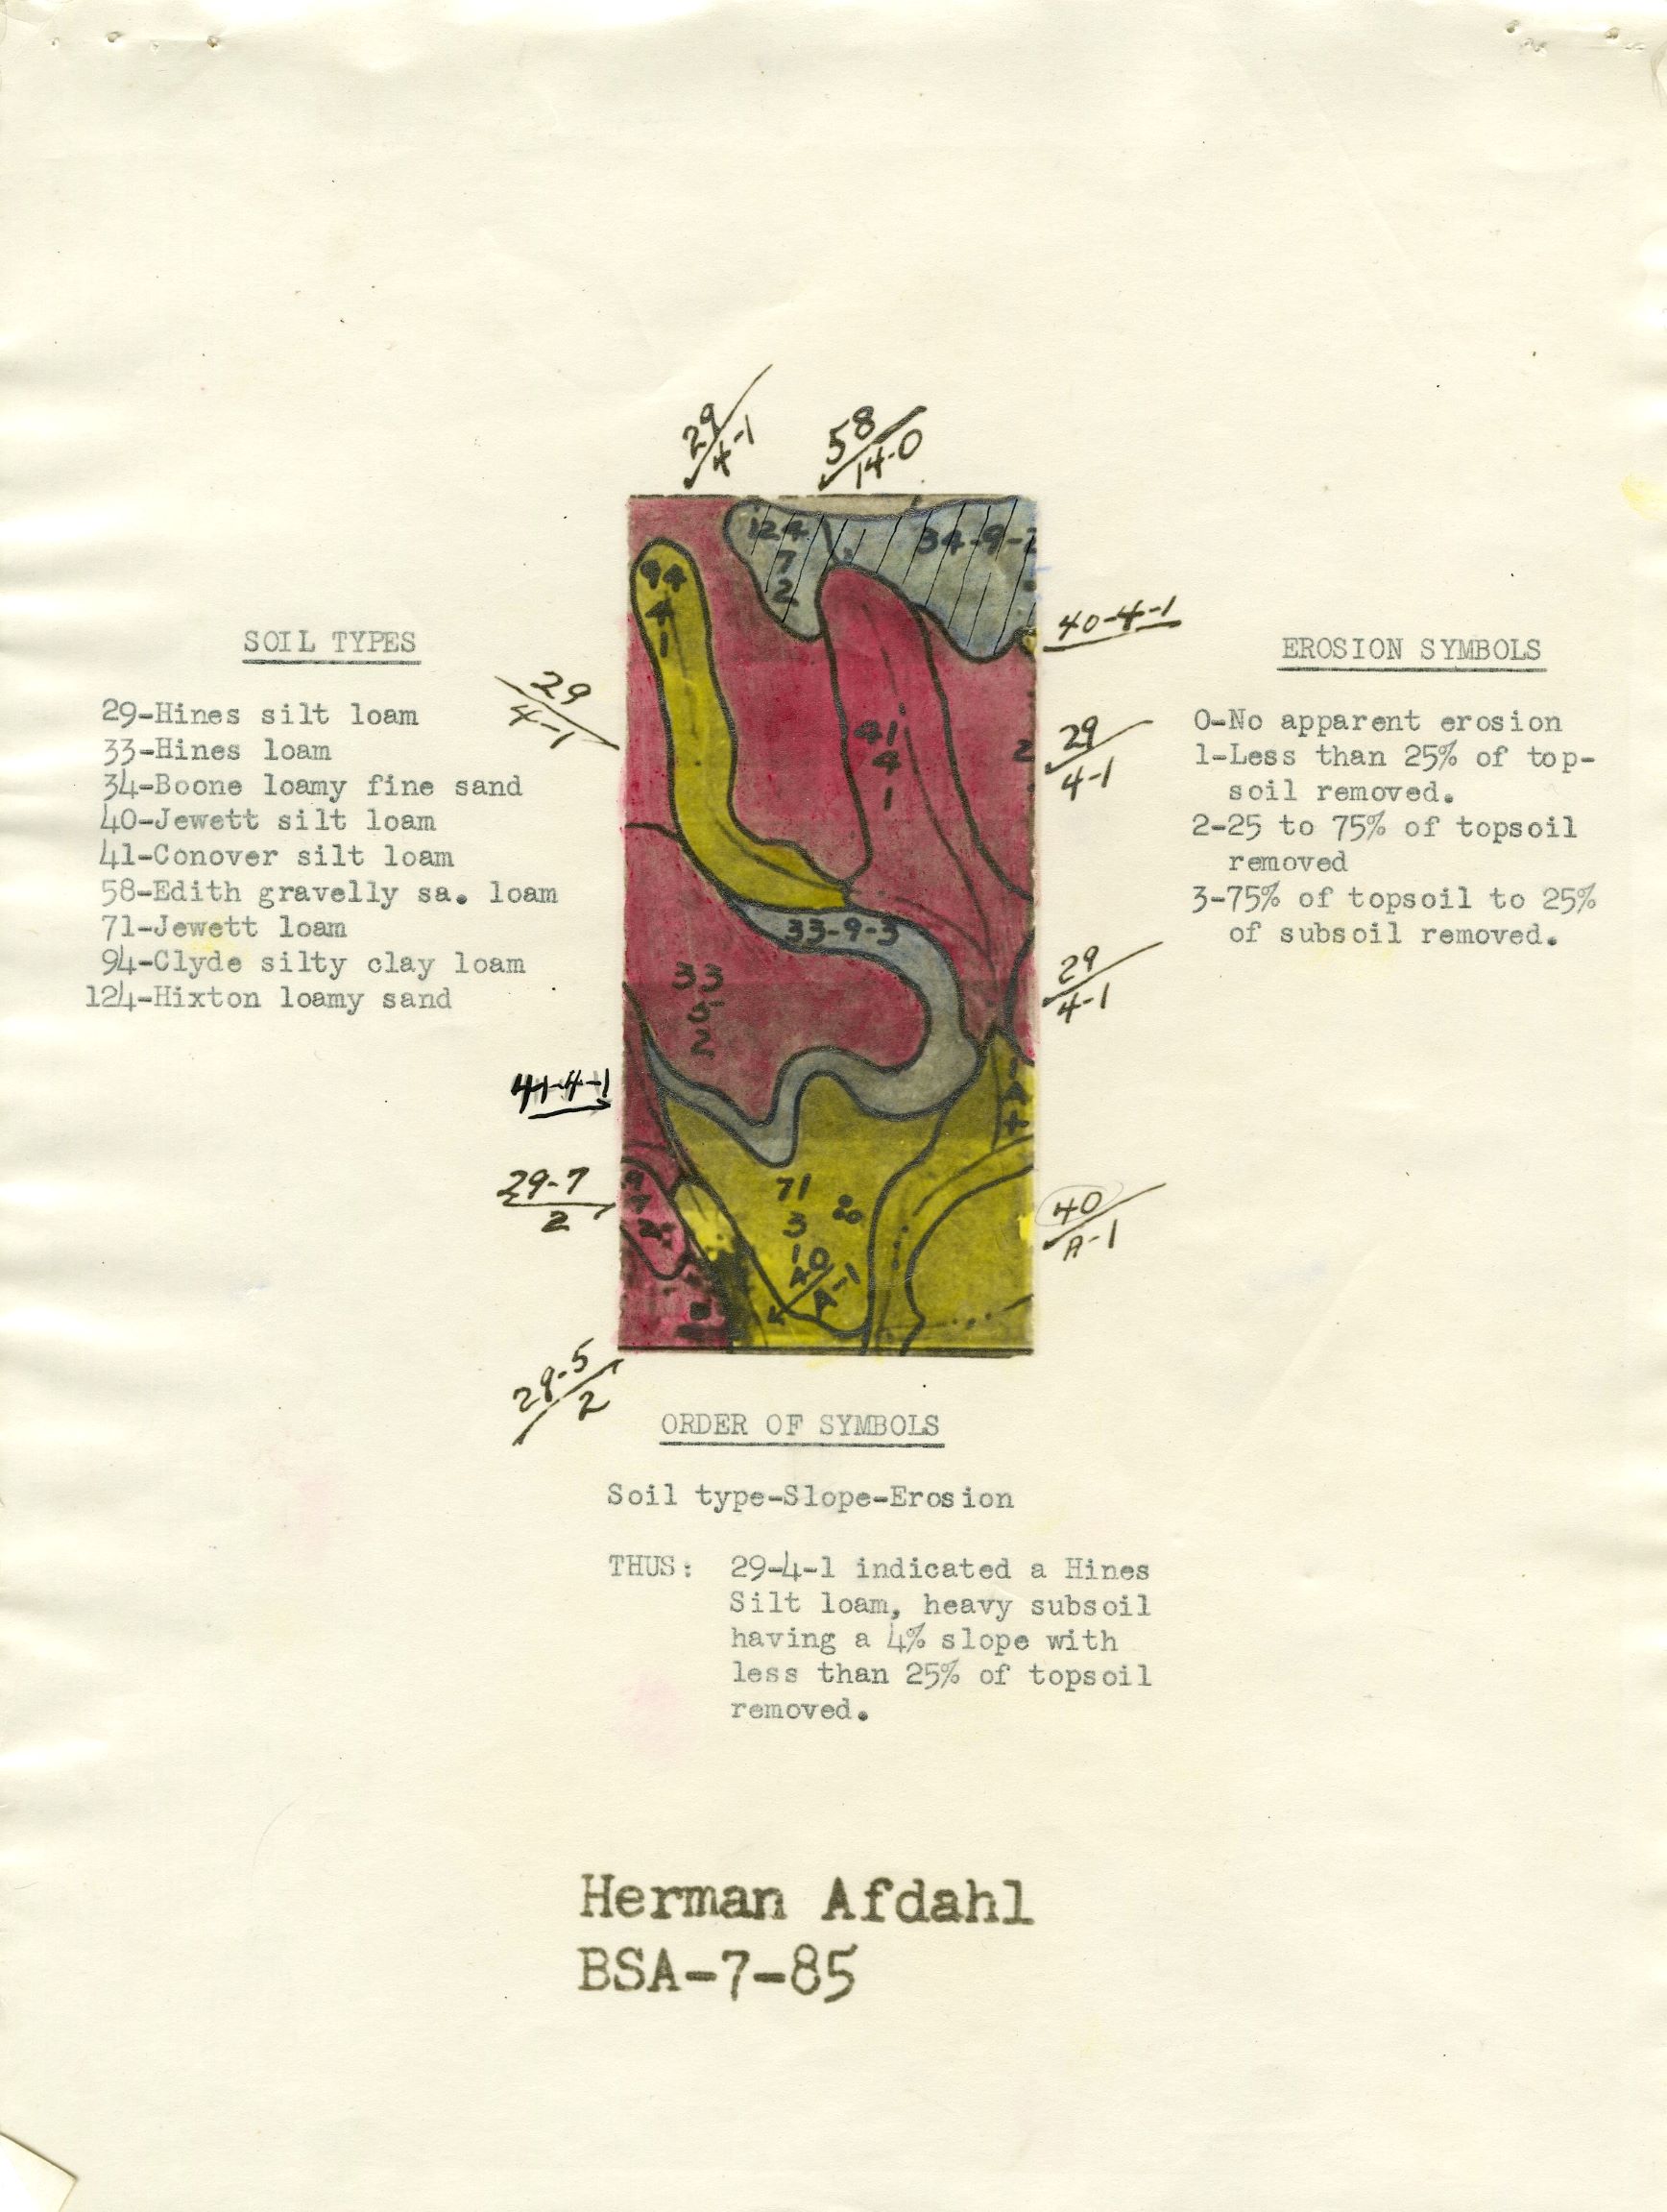 Soil types and erosion of Afdahl farm, 1943